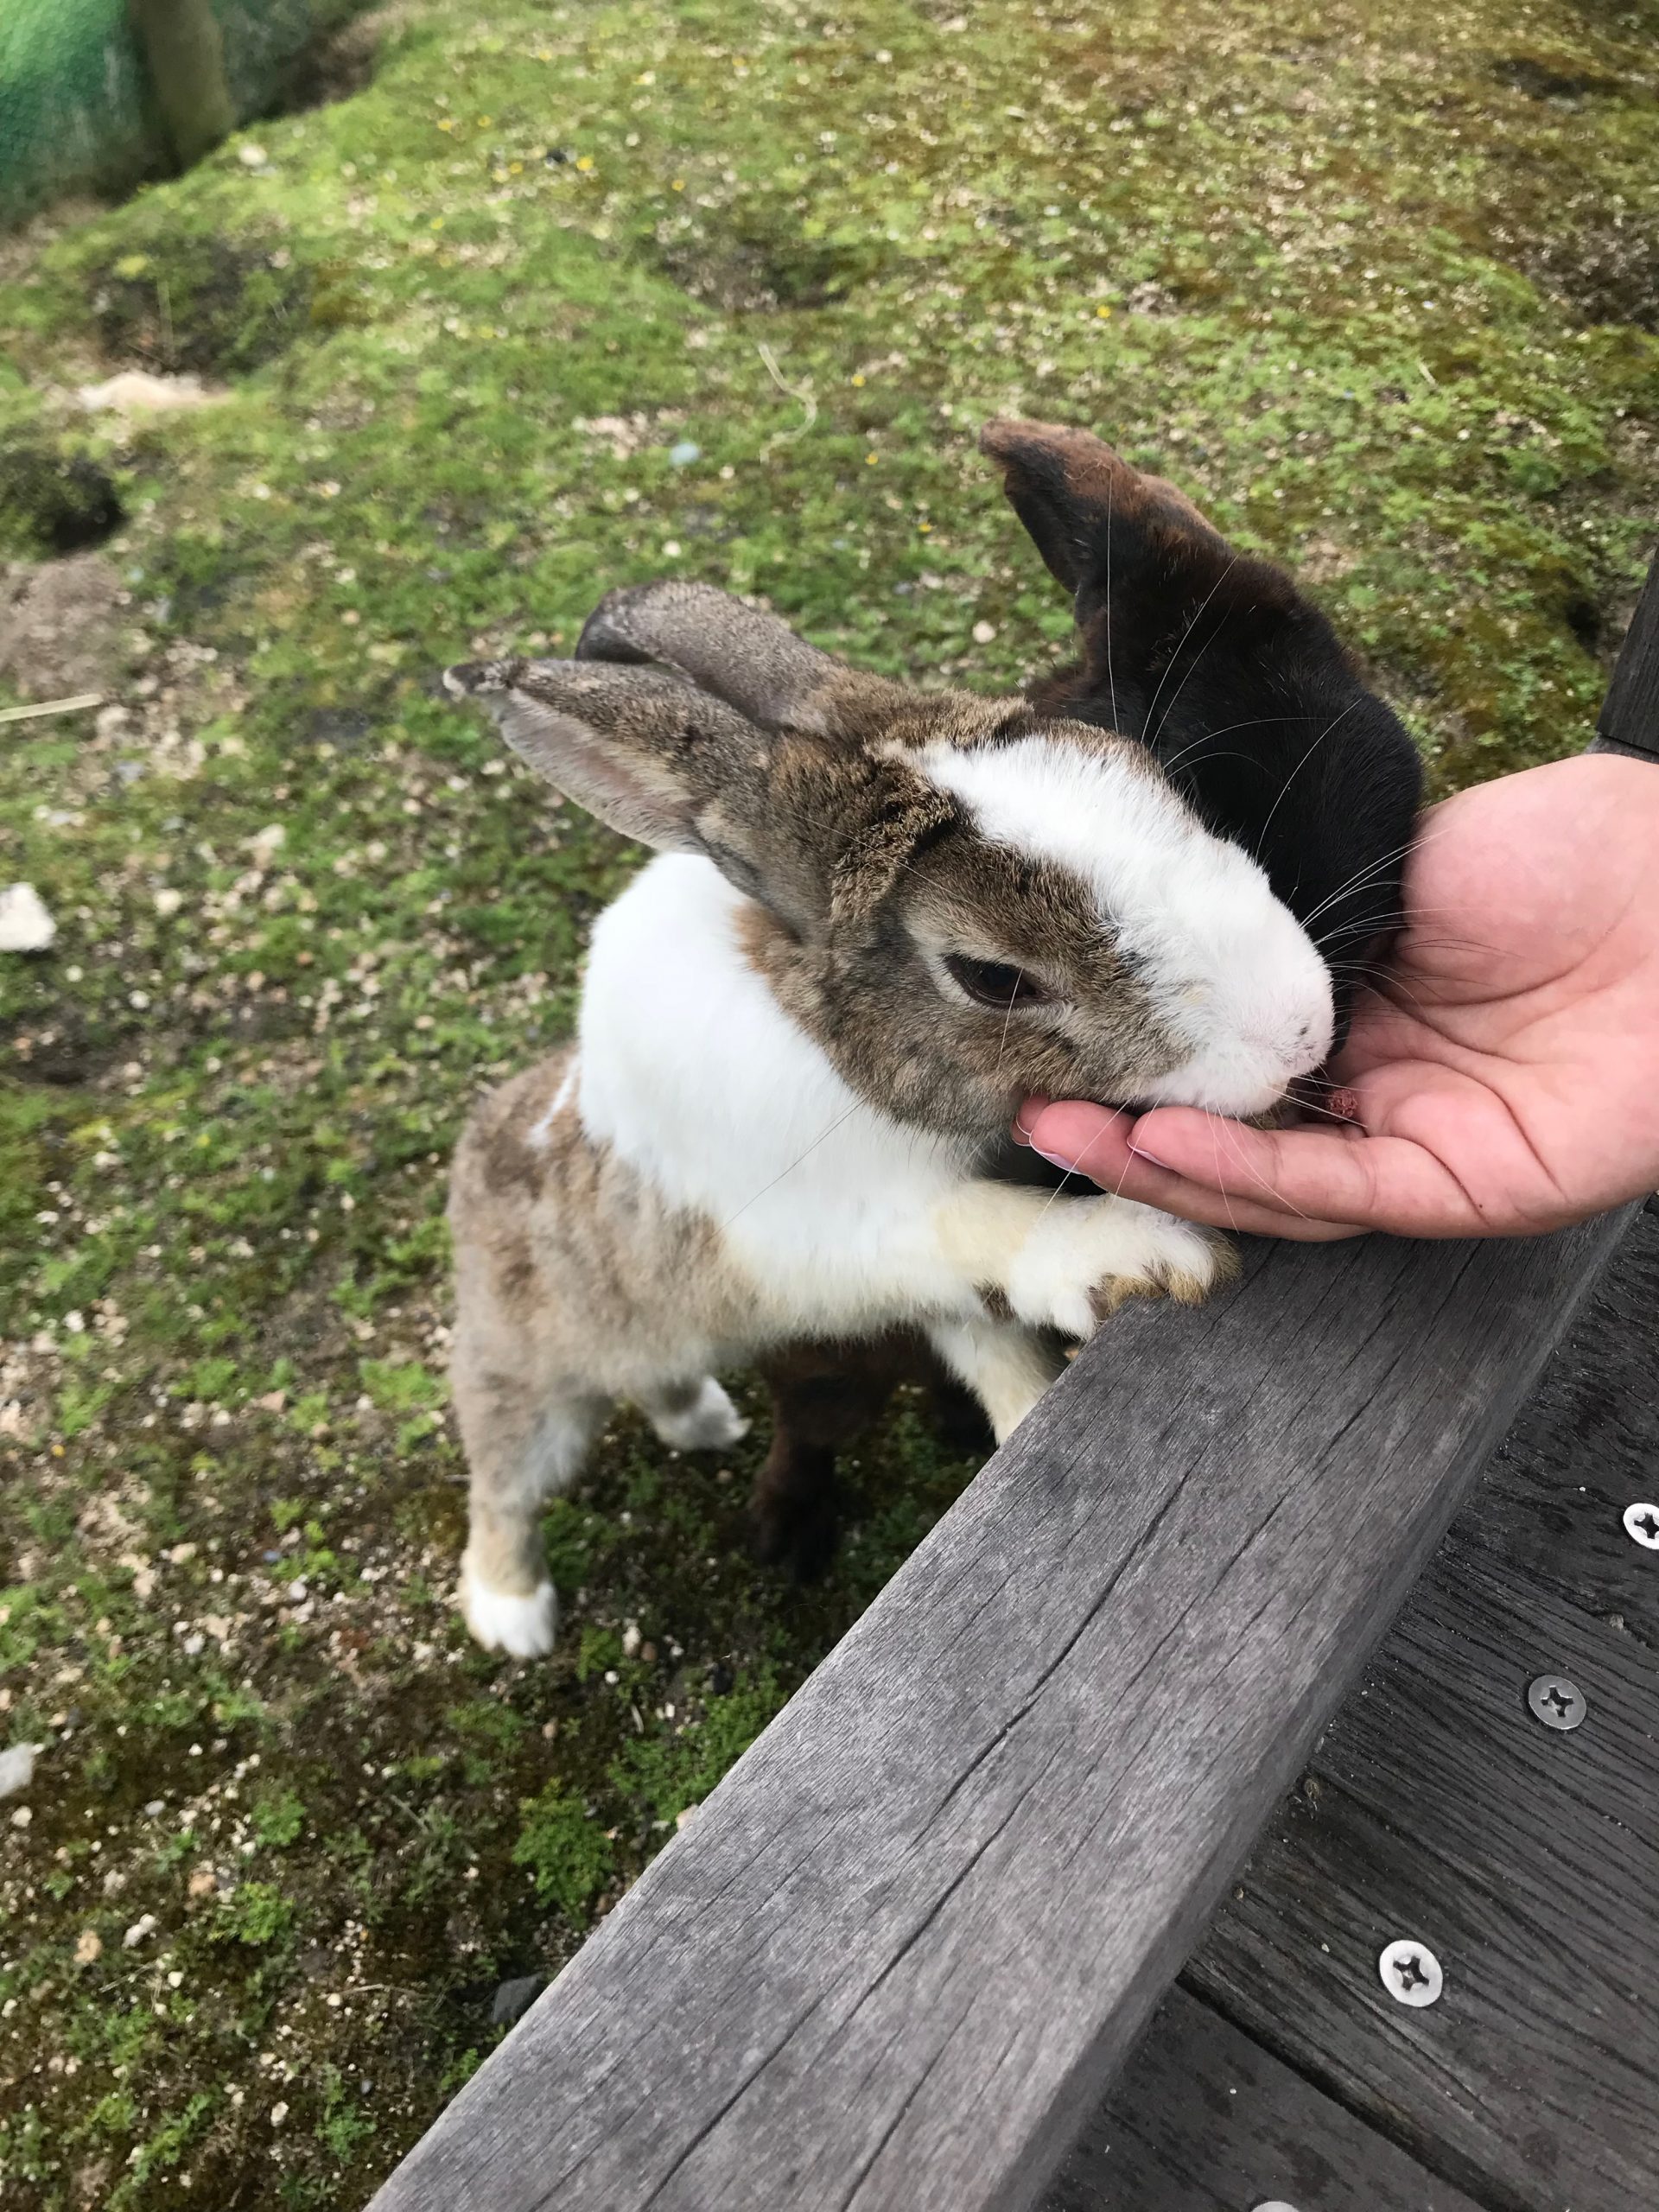 Feeding the rabbits on Rabbit Island